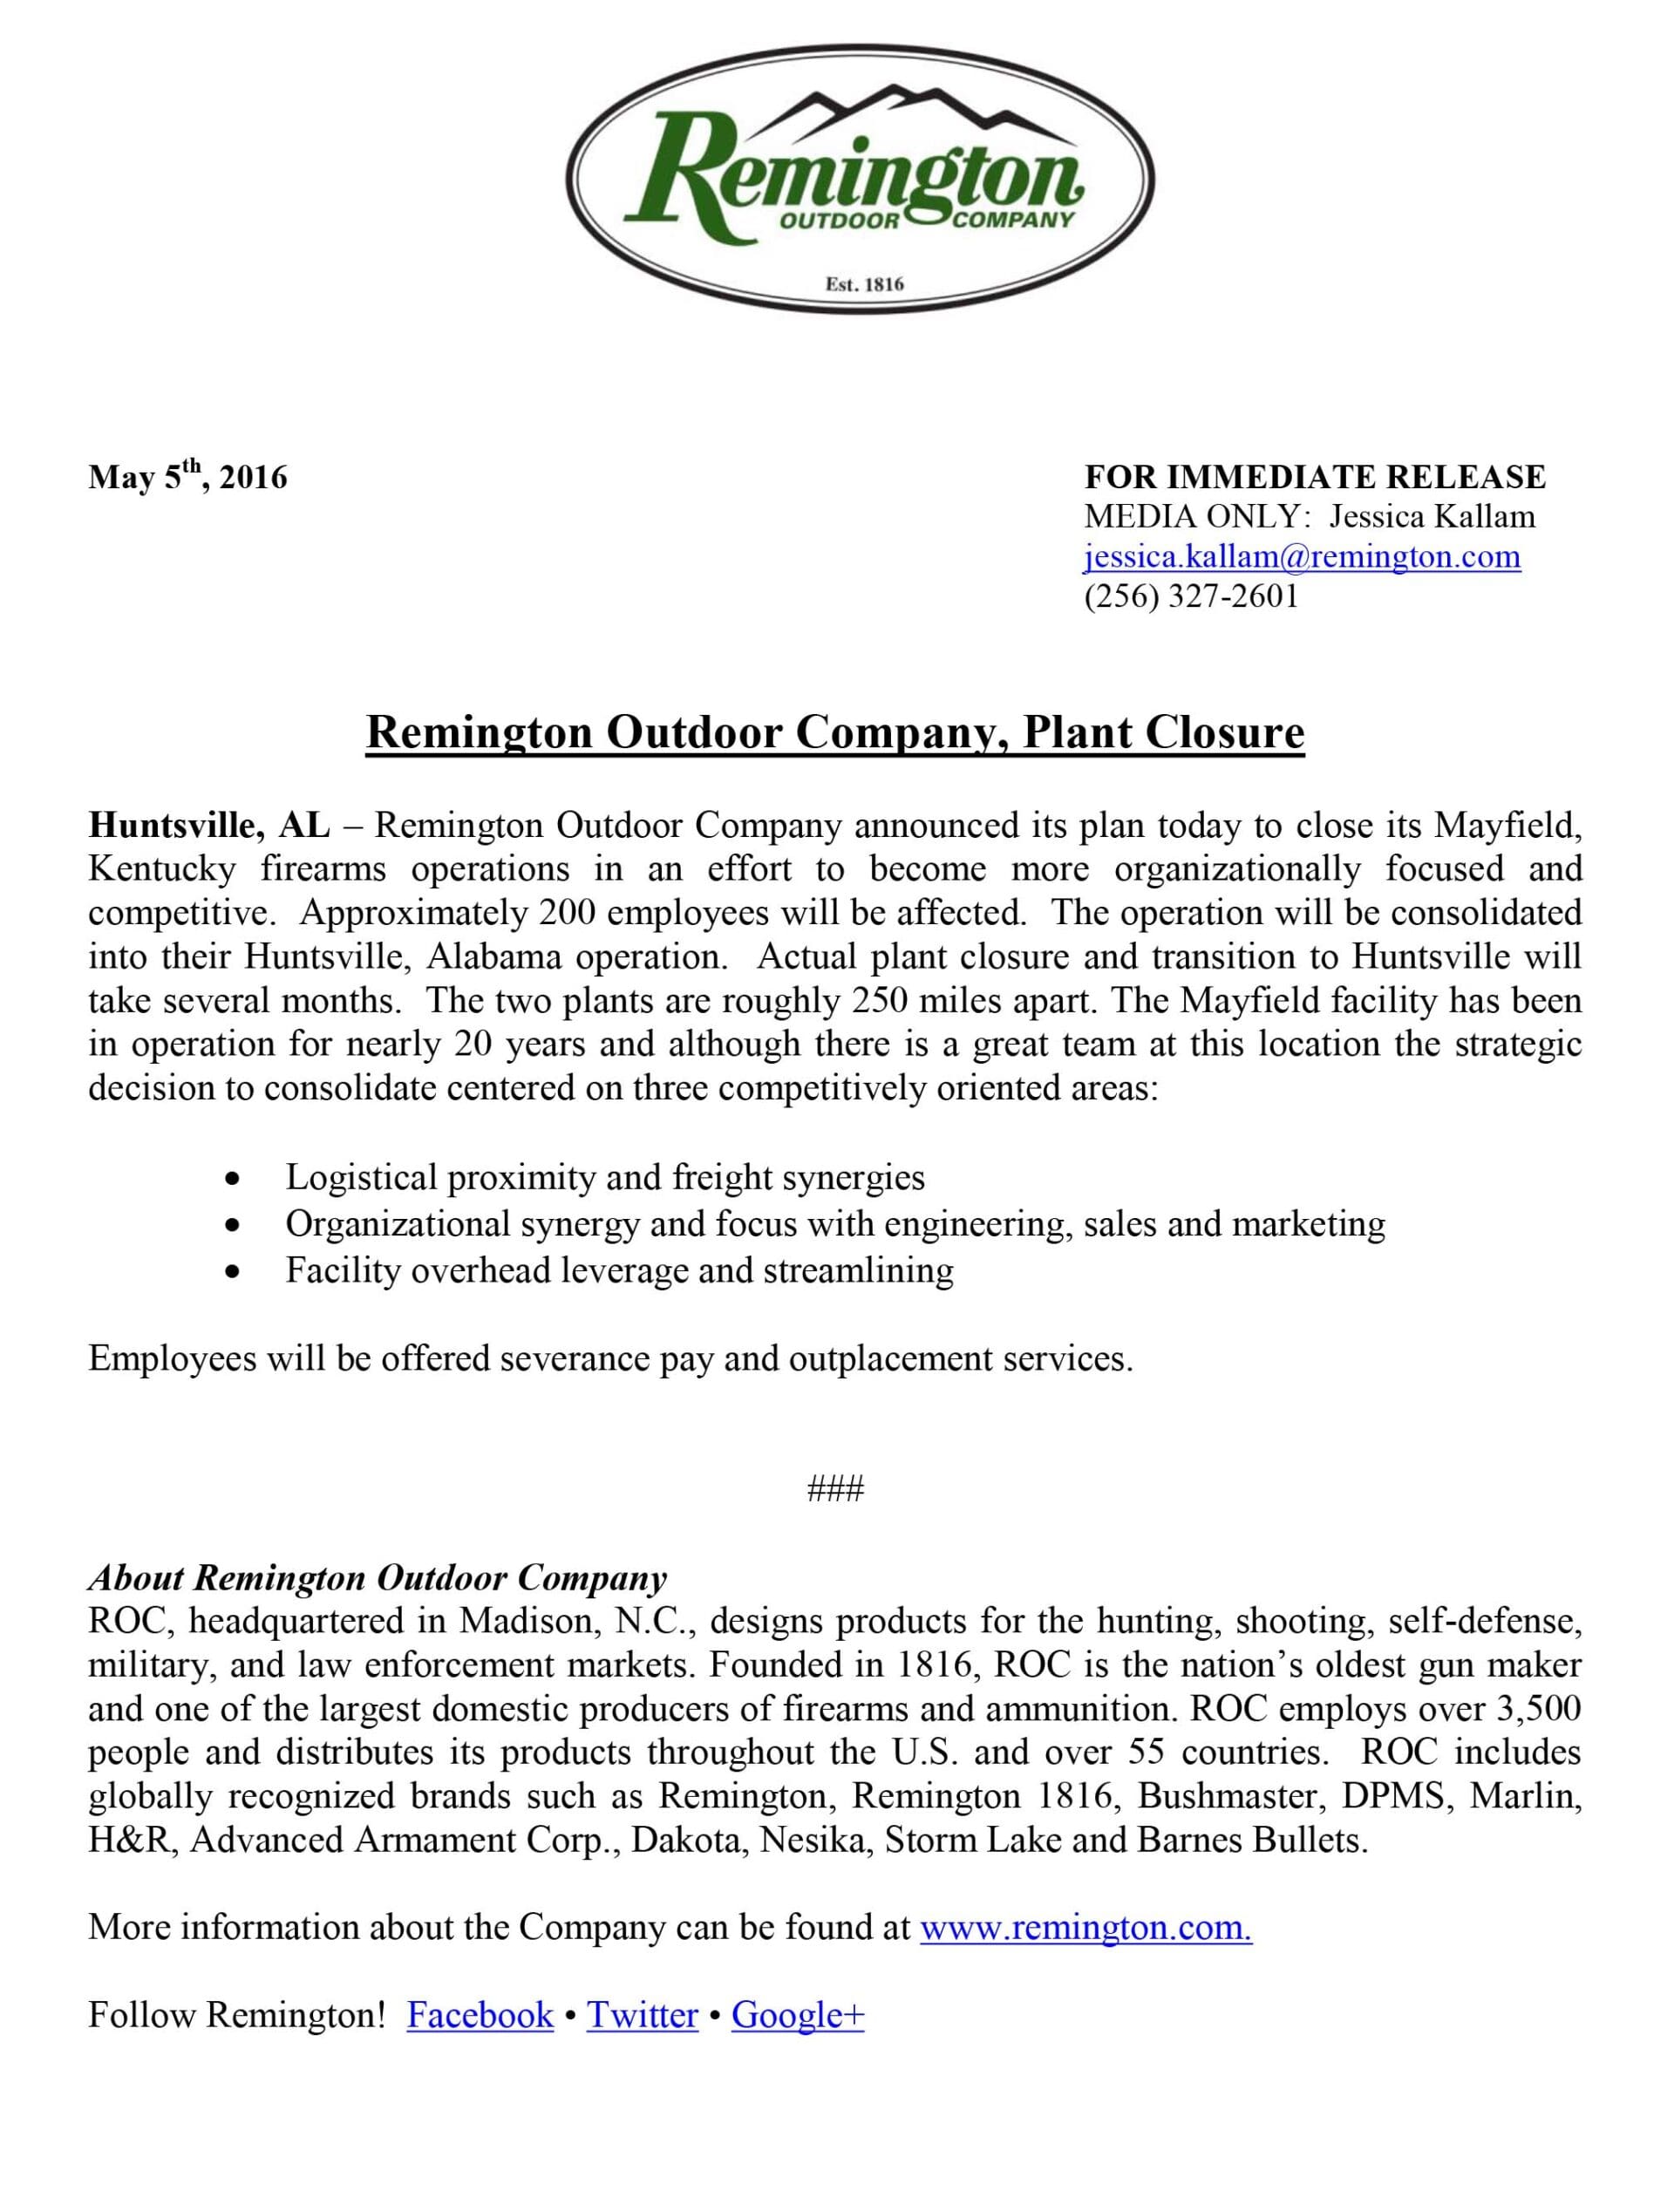 Remington Outdoor Company, Plant Closure PR 05.05.16